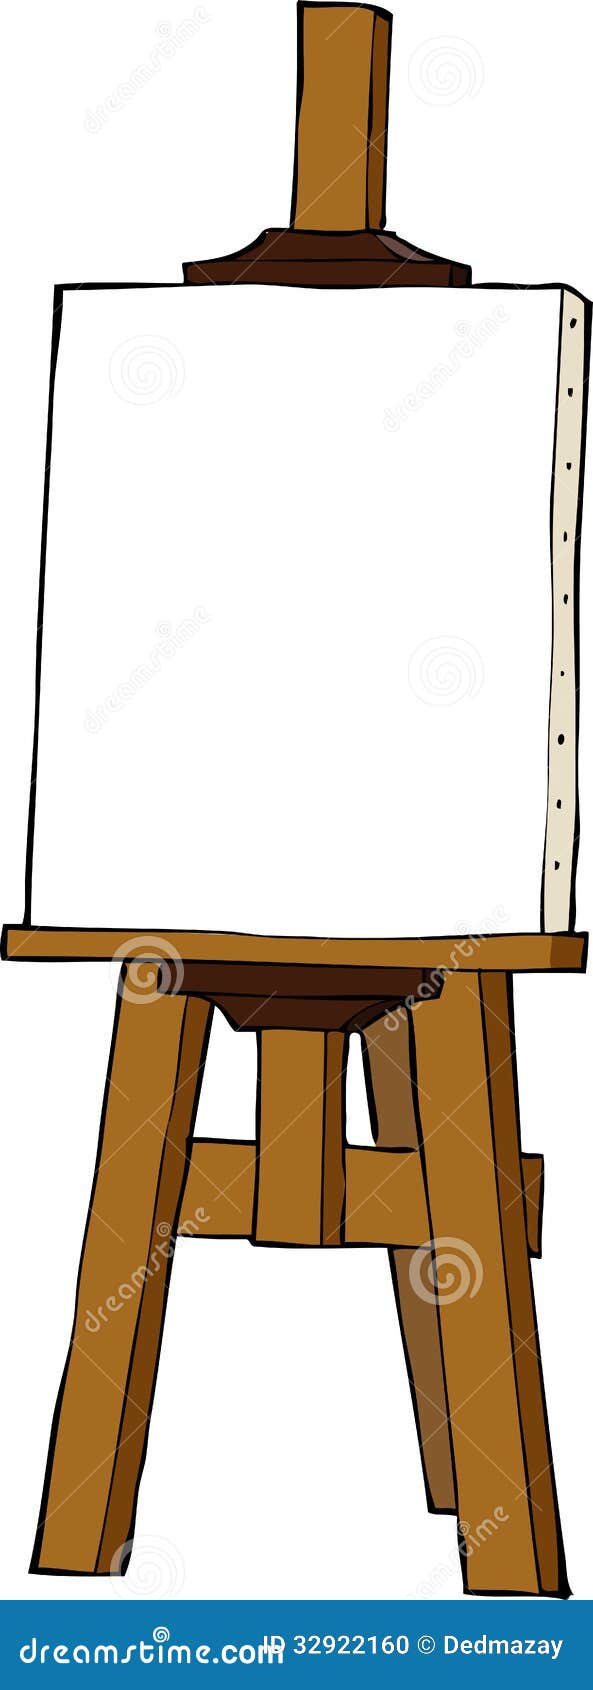 Cartoon easel stock vector. Image of creativity, canvas 